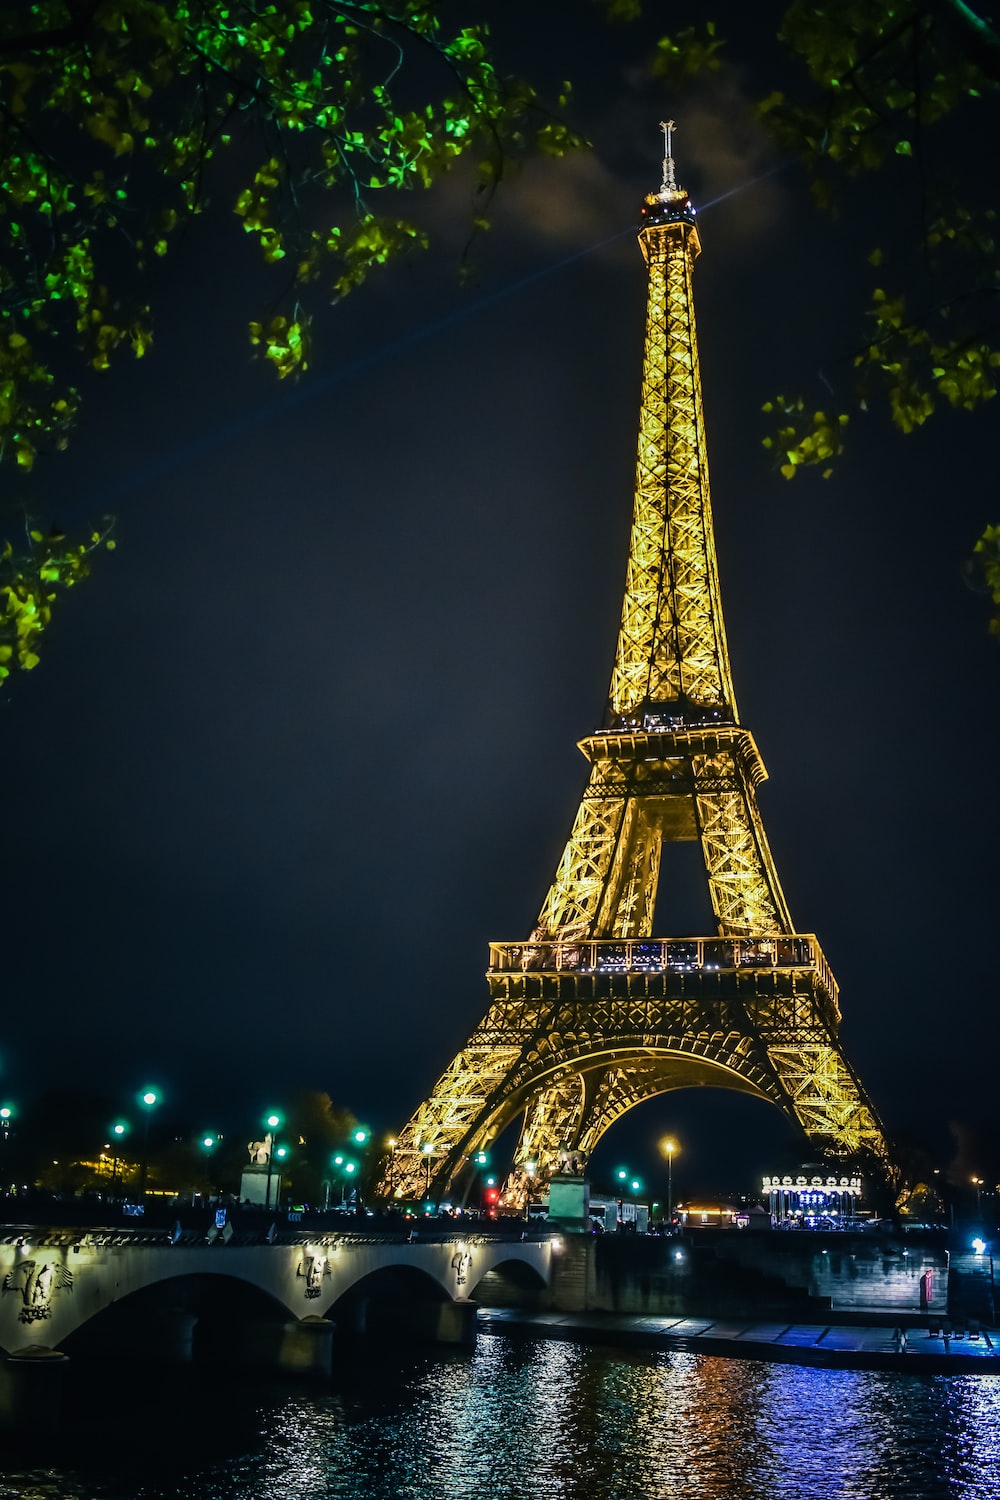 Eiffel Tower, Paris, France Picture. Download Free Image